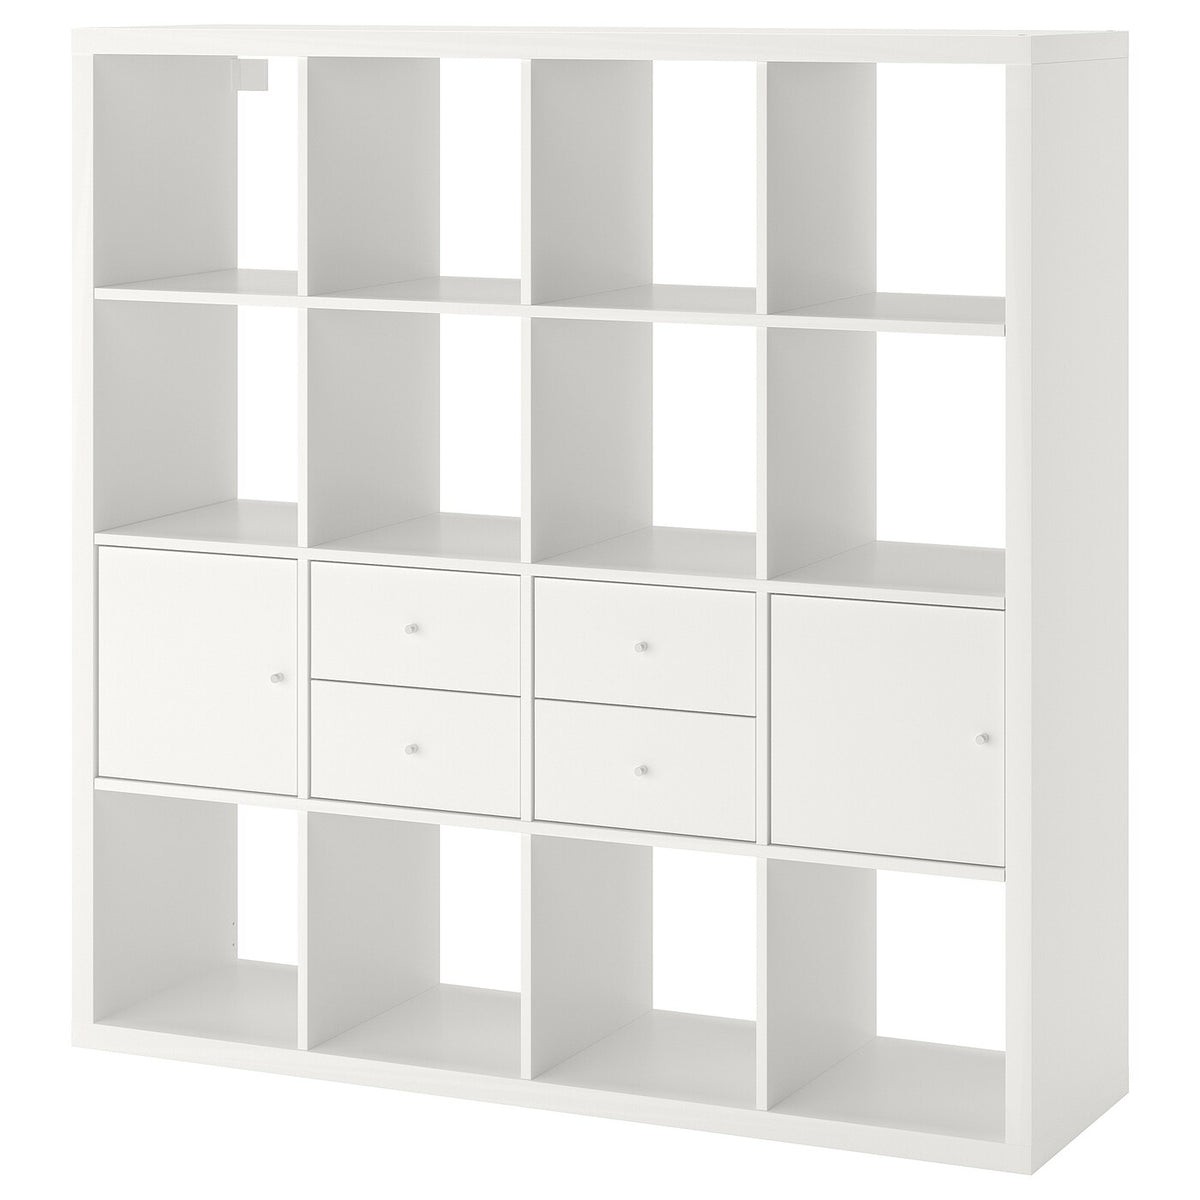 IKEA KALLAX Shelving with 2 doors/2 drawers, white, 147x147 cm